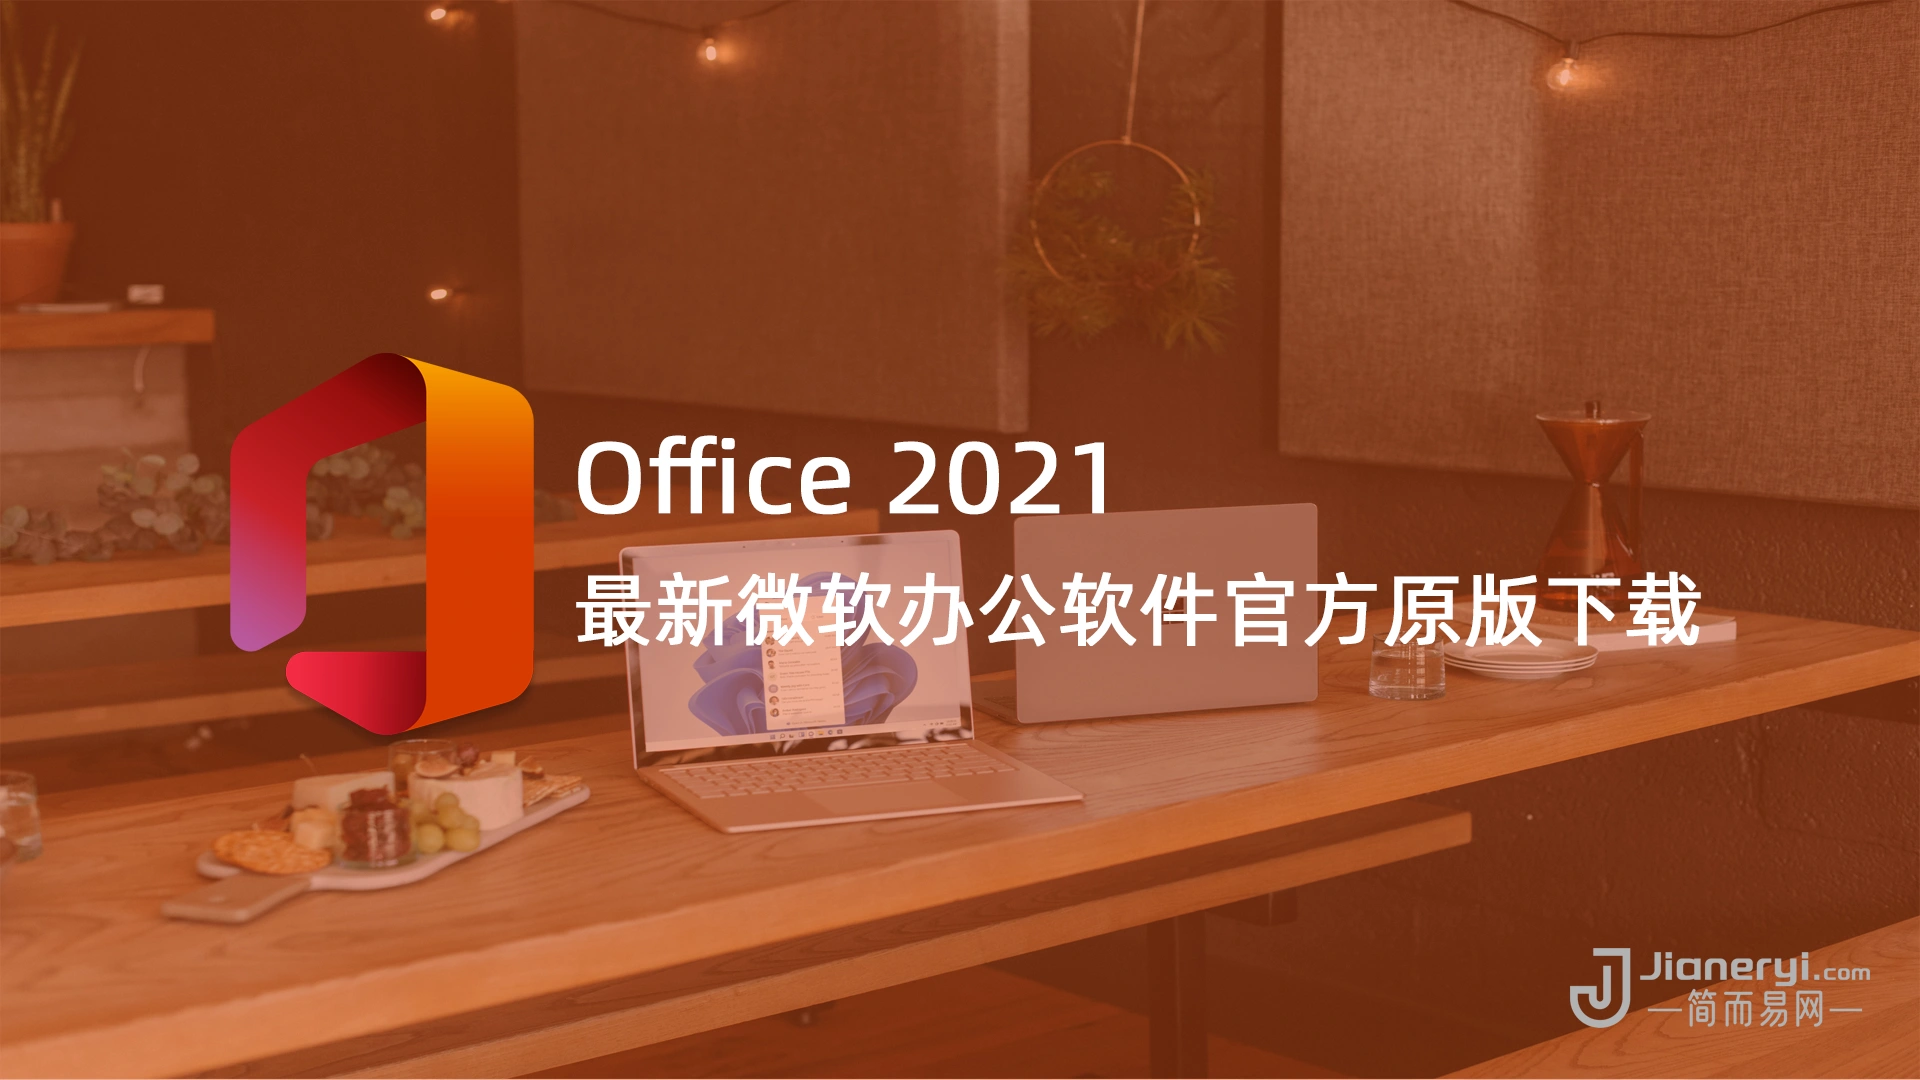 Office 2021 简体中文专业增强版官方镜像下载 - Office365办公软件最新版丨简而易网